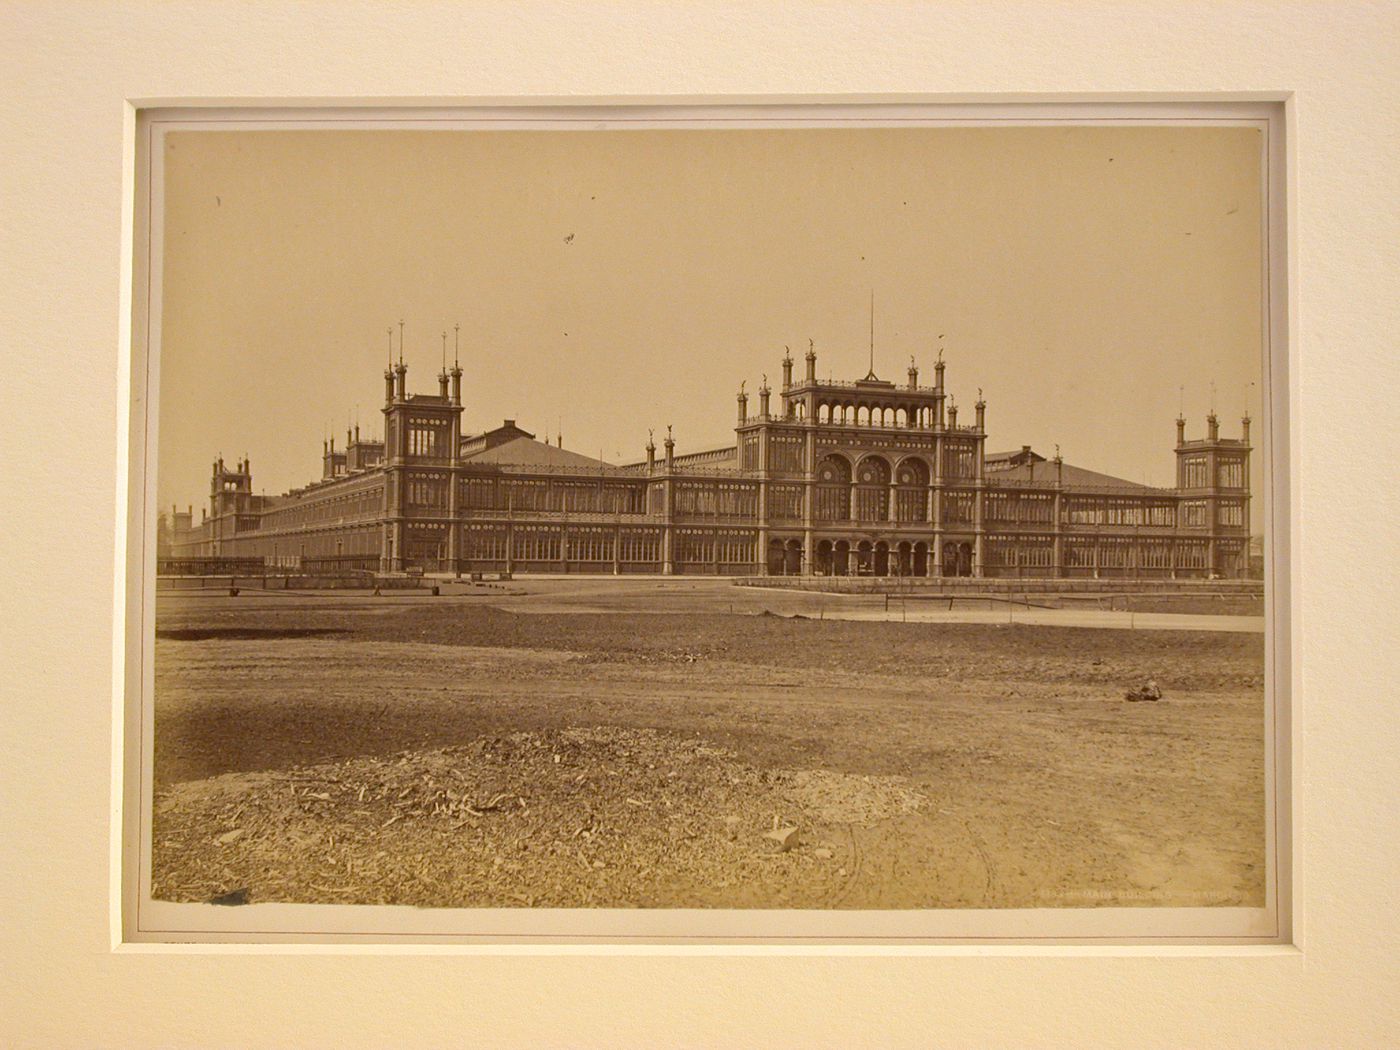 Exterior view of main building, Centennial International Exhibition of 1876, Philadelphia, Pennsylvania, United States